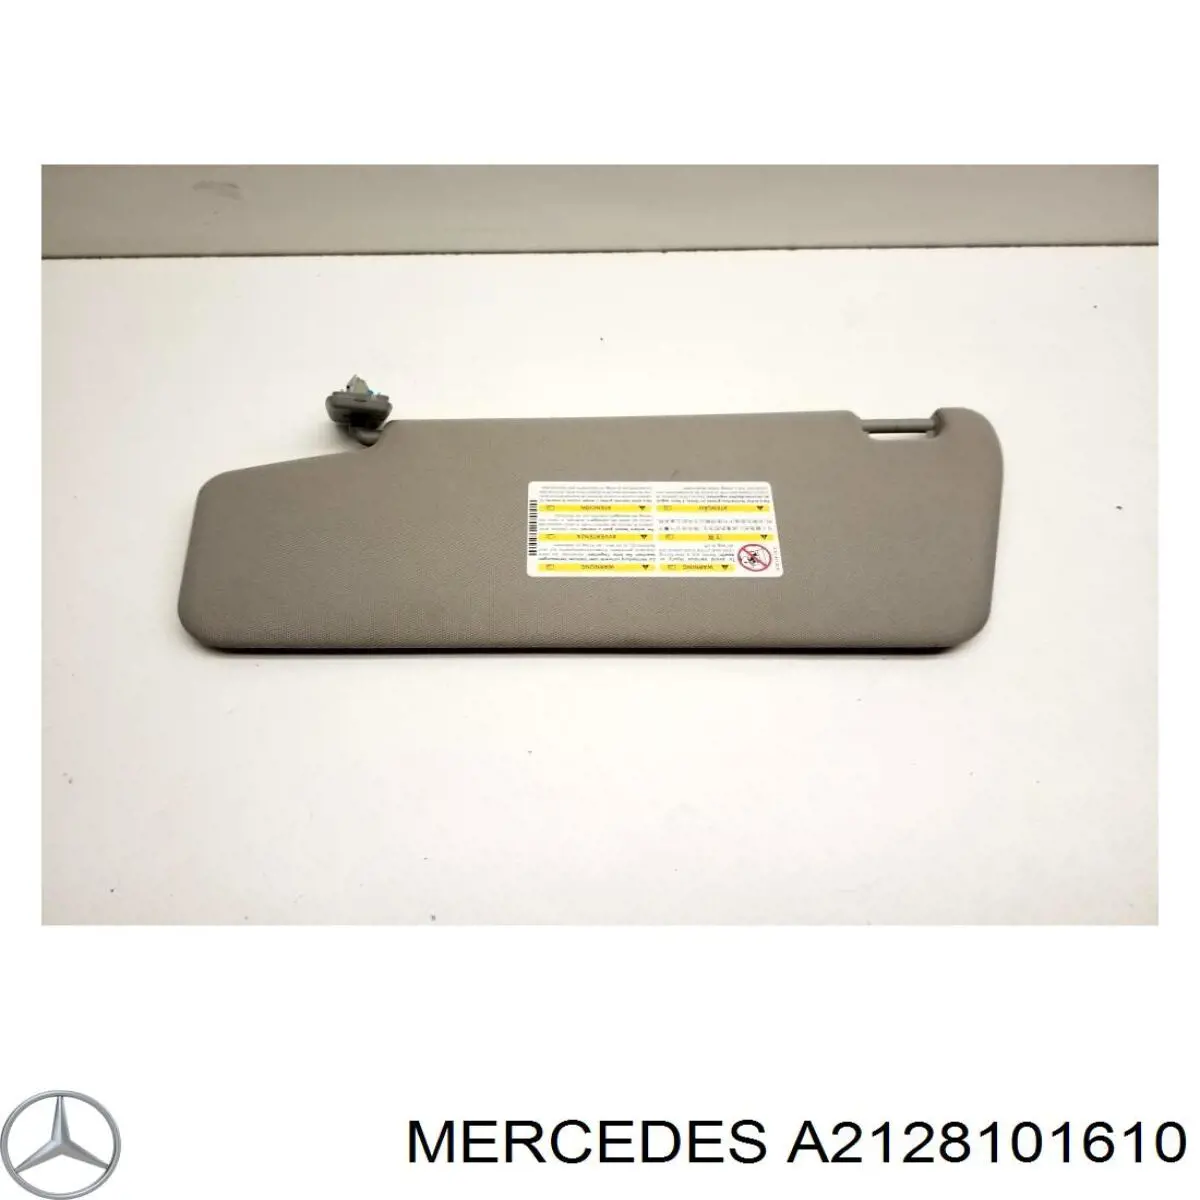 A2128101610 Mercedes